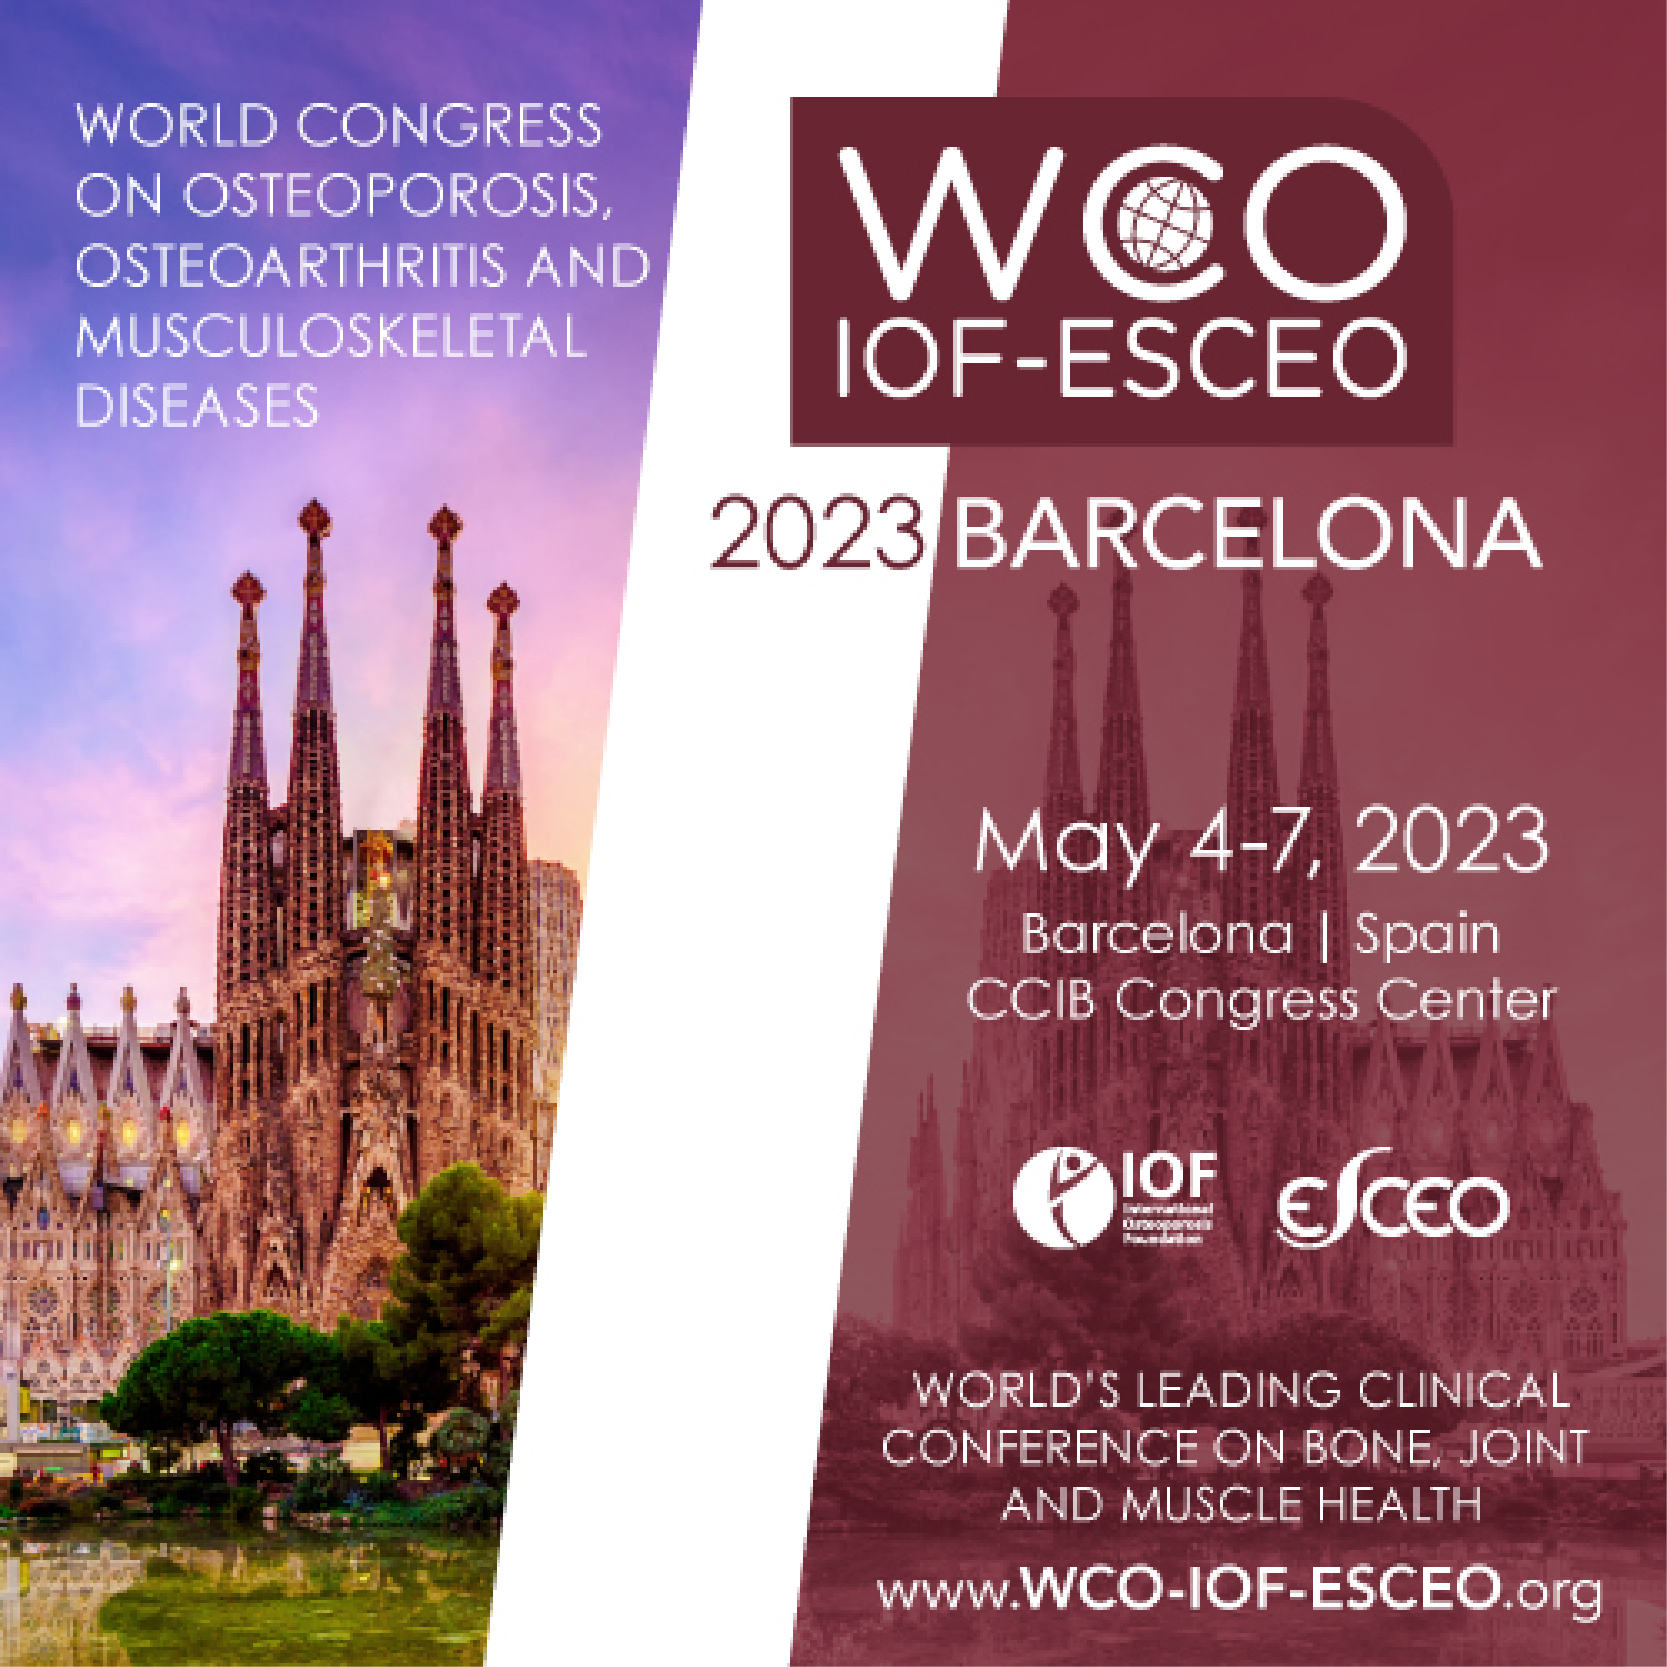 WORLD CONGRESS ON OSTEOPOROSIS, OSTEOARTHRITIS AND MUSCULOSKELETAL DISEASES - WCO-IOF-ESCEO  2023